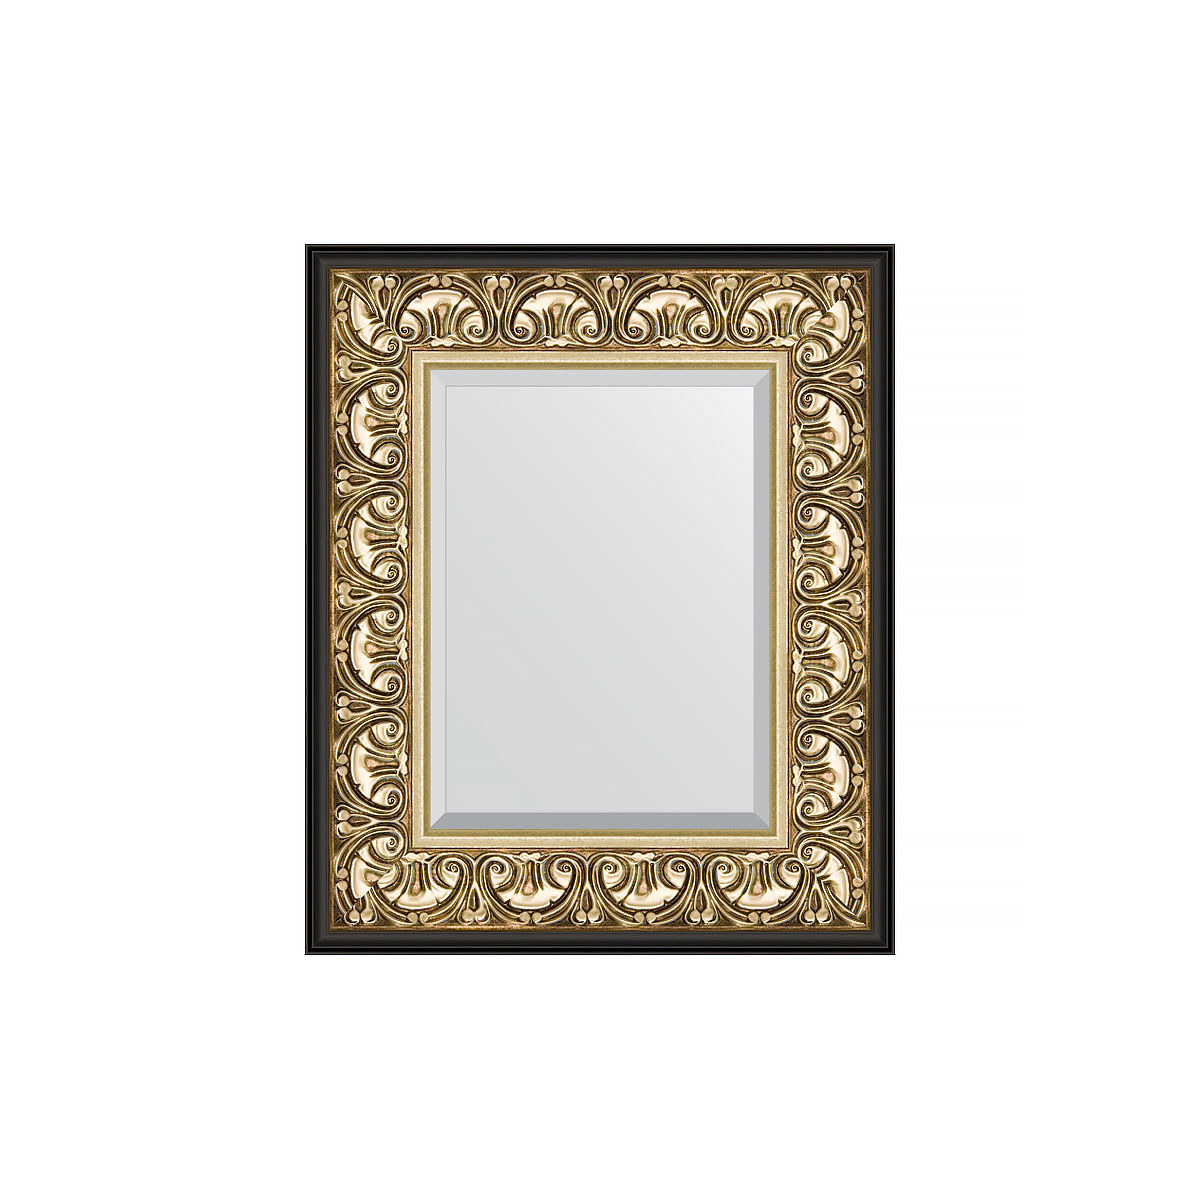 90311809 Зеркало с фацетом в багетной раме барокко золото 106 мм 50х60 см BY 1373 EXCLUSIVE STLM-0178819 EVOFORM